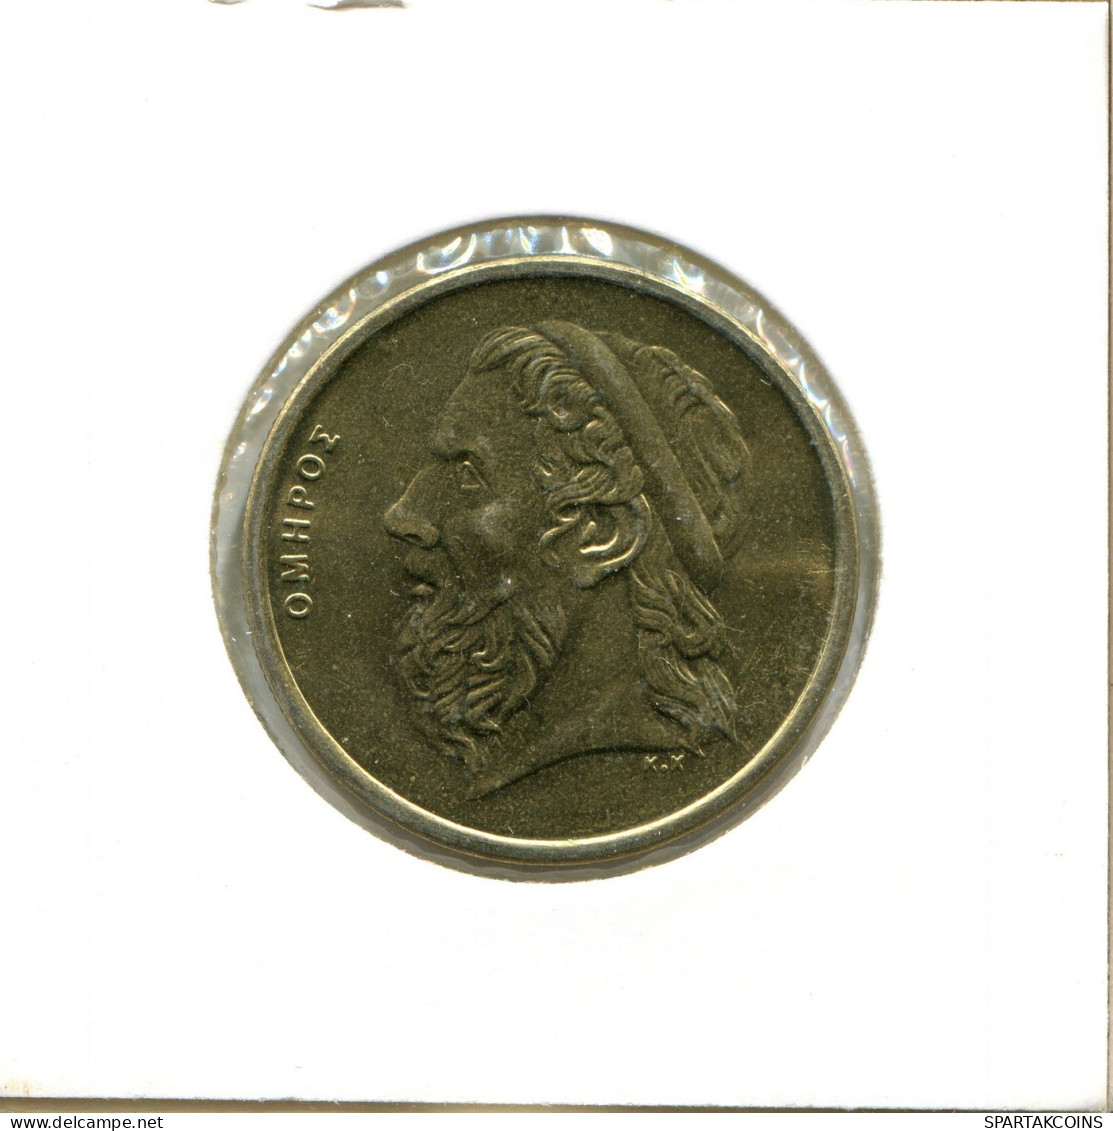 50 DRACHMES 1988 GRECIA GREECE Moneda #AX657.E.A - Griekenland